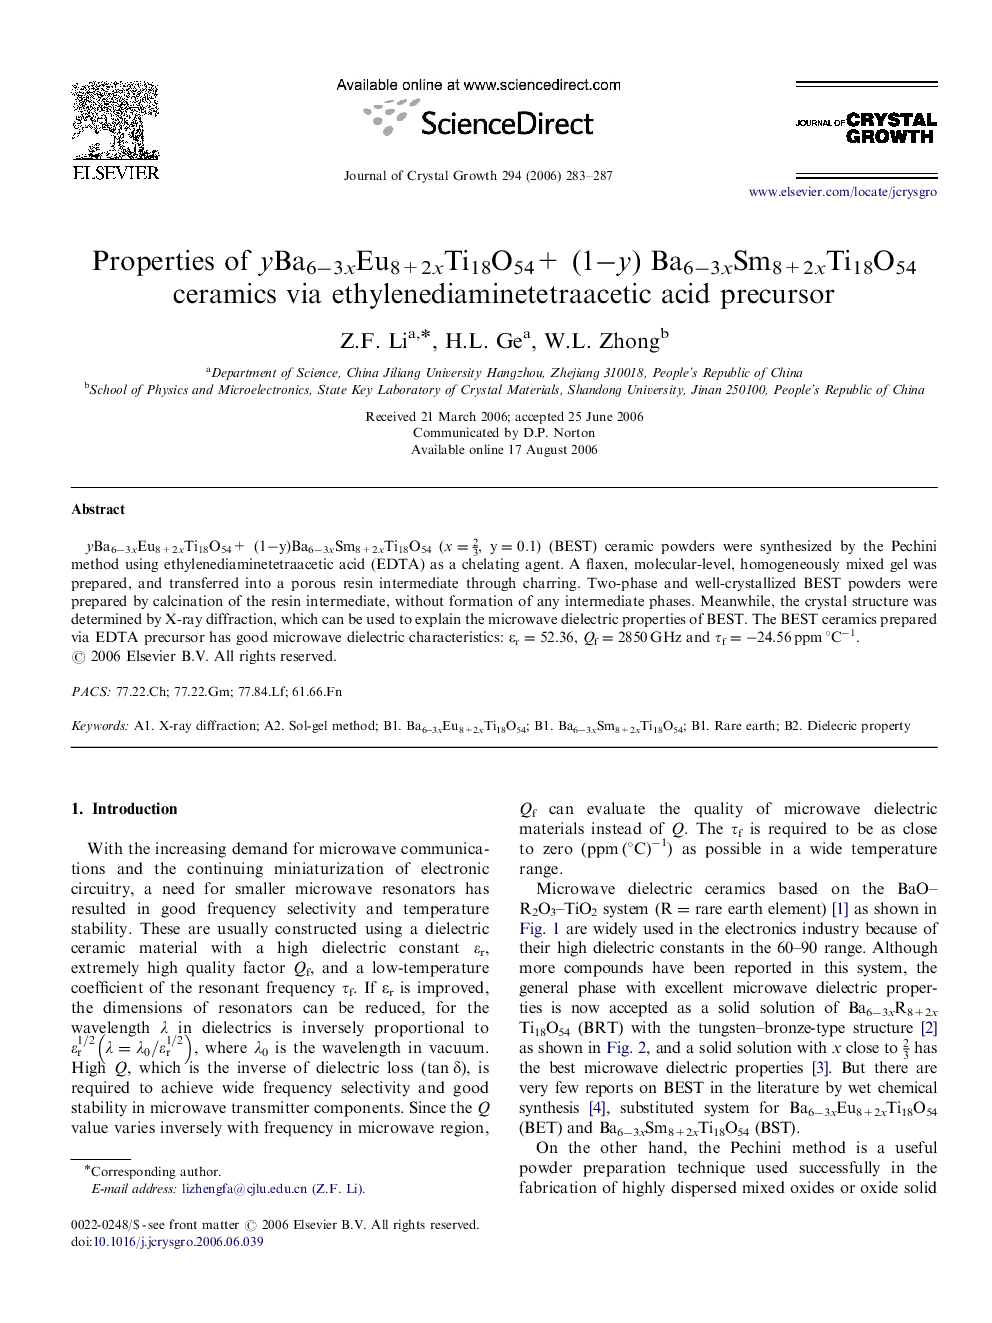 Properties of yBa6â3xEu8+2xTi18O54+ (1ây) Ba6â3xSm8+2xTi18O54 ceramics via ethylenediaminetetraacetic acid precursor